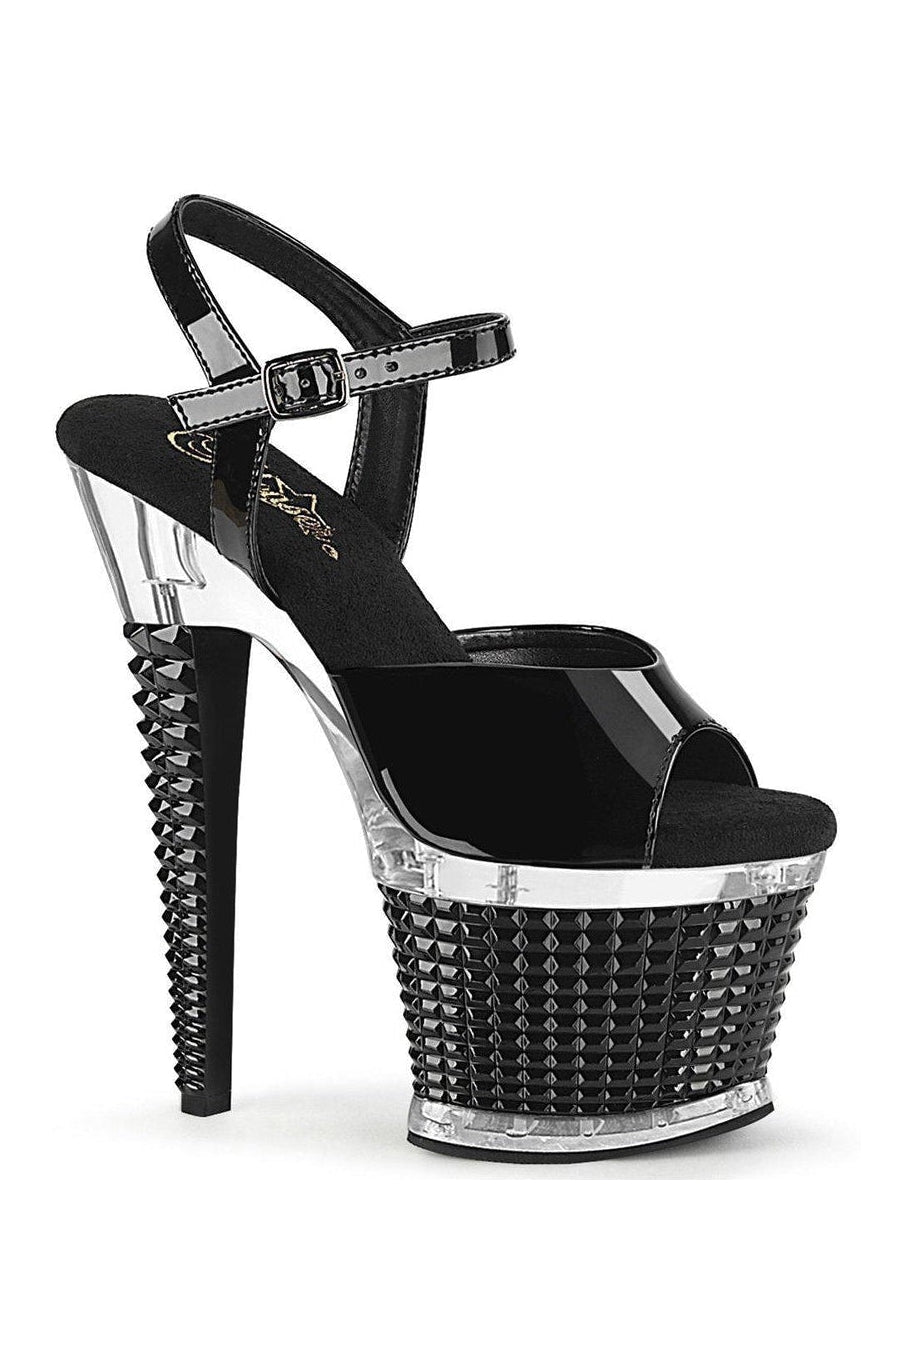 SPECTATOR-709 Sandal | Black Patent-Sandals-Pleaser-Black-9-Patent-SEXYSHOES.COM